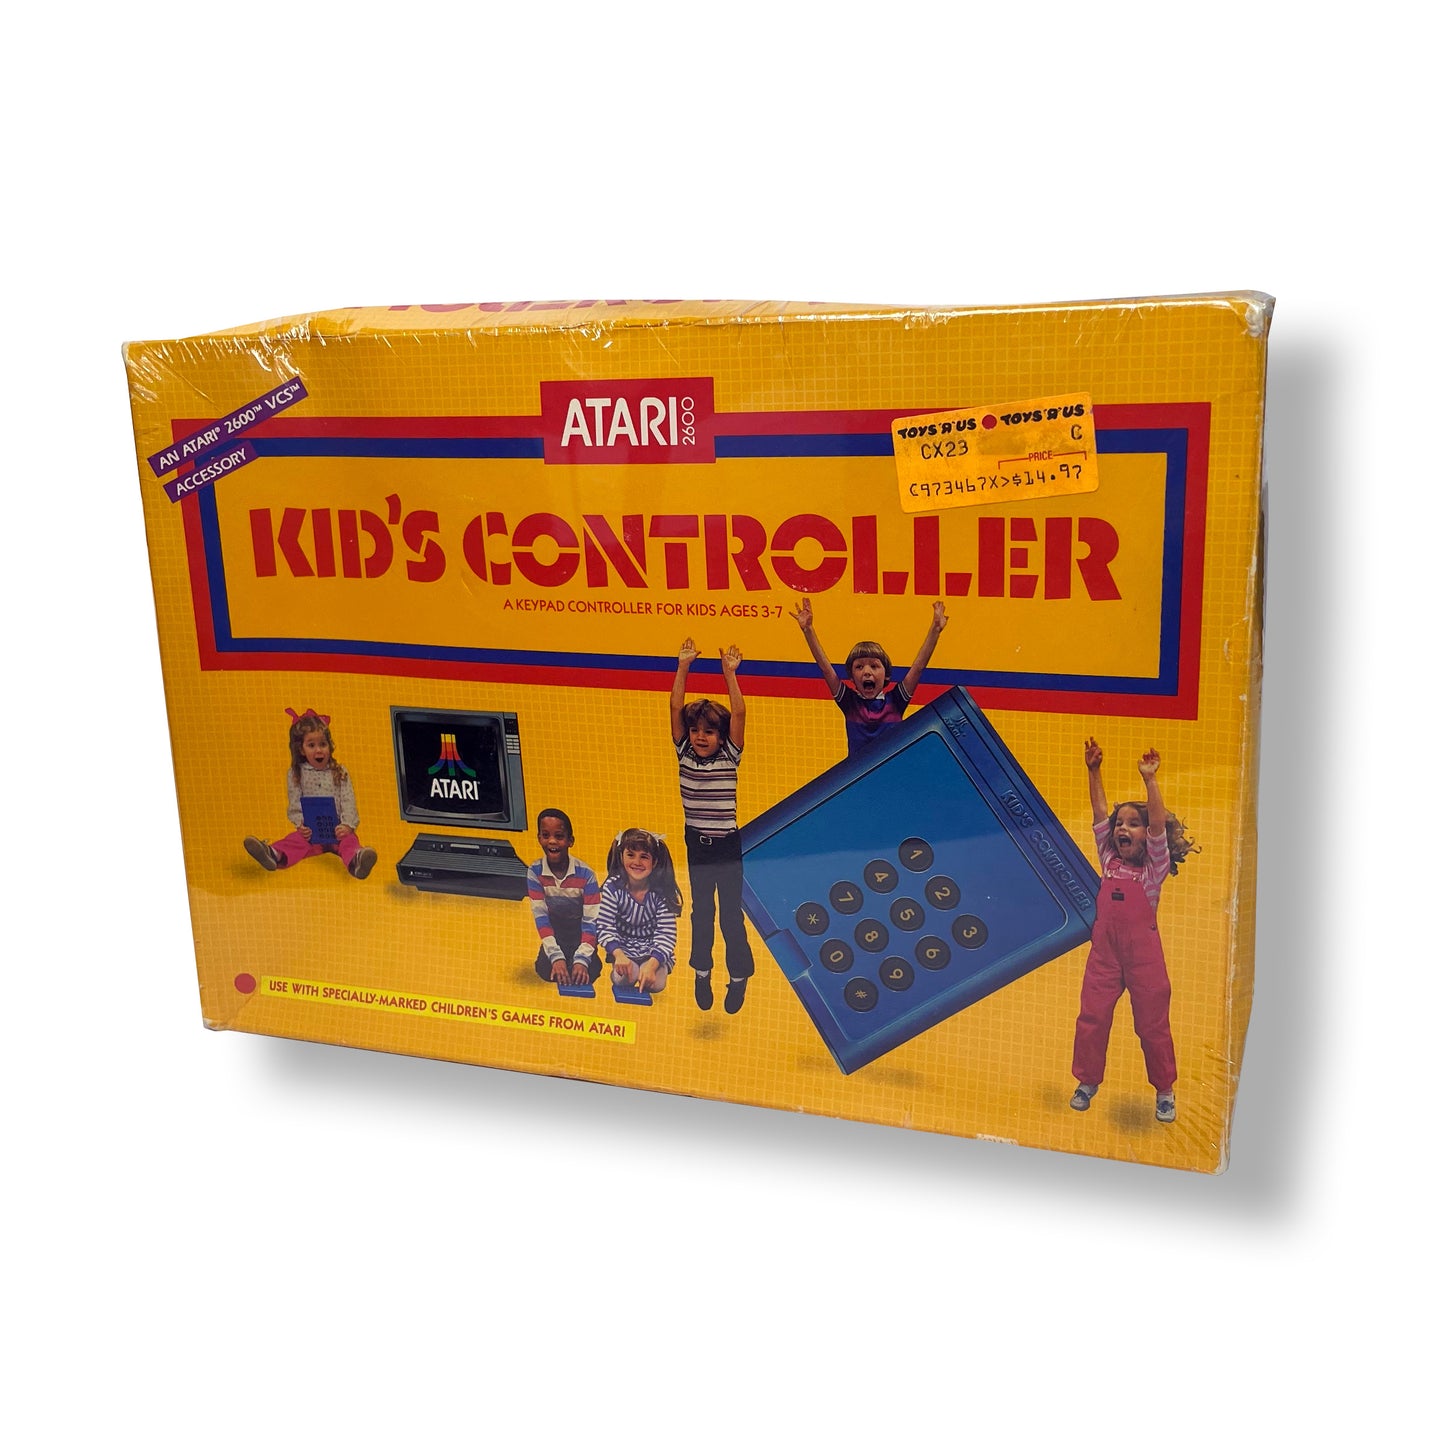 Atari Kid's Controller